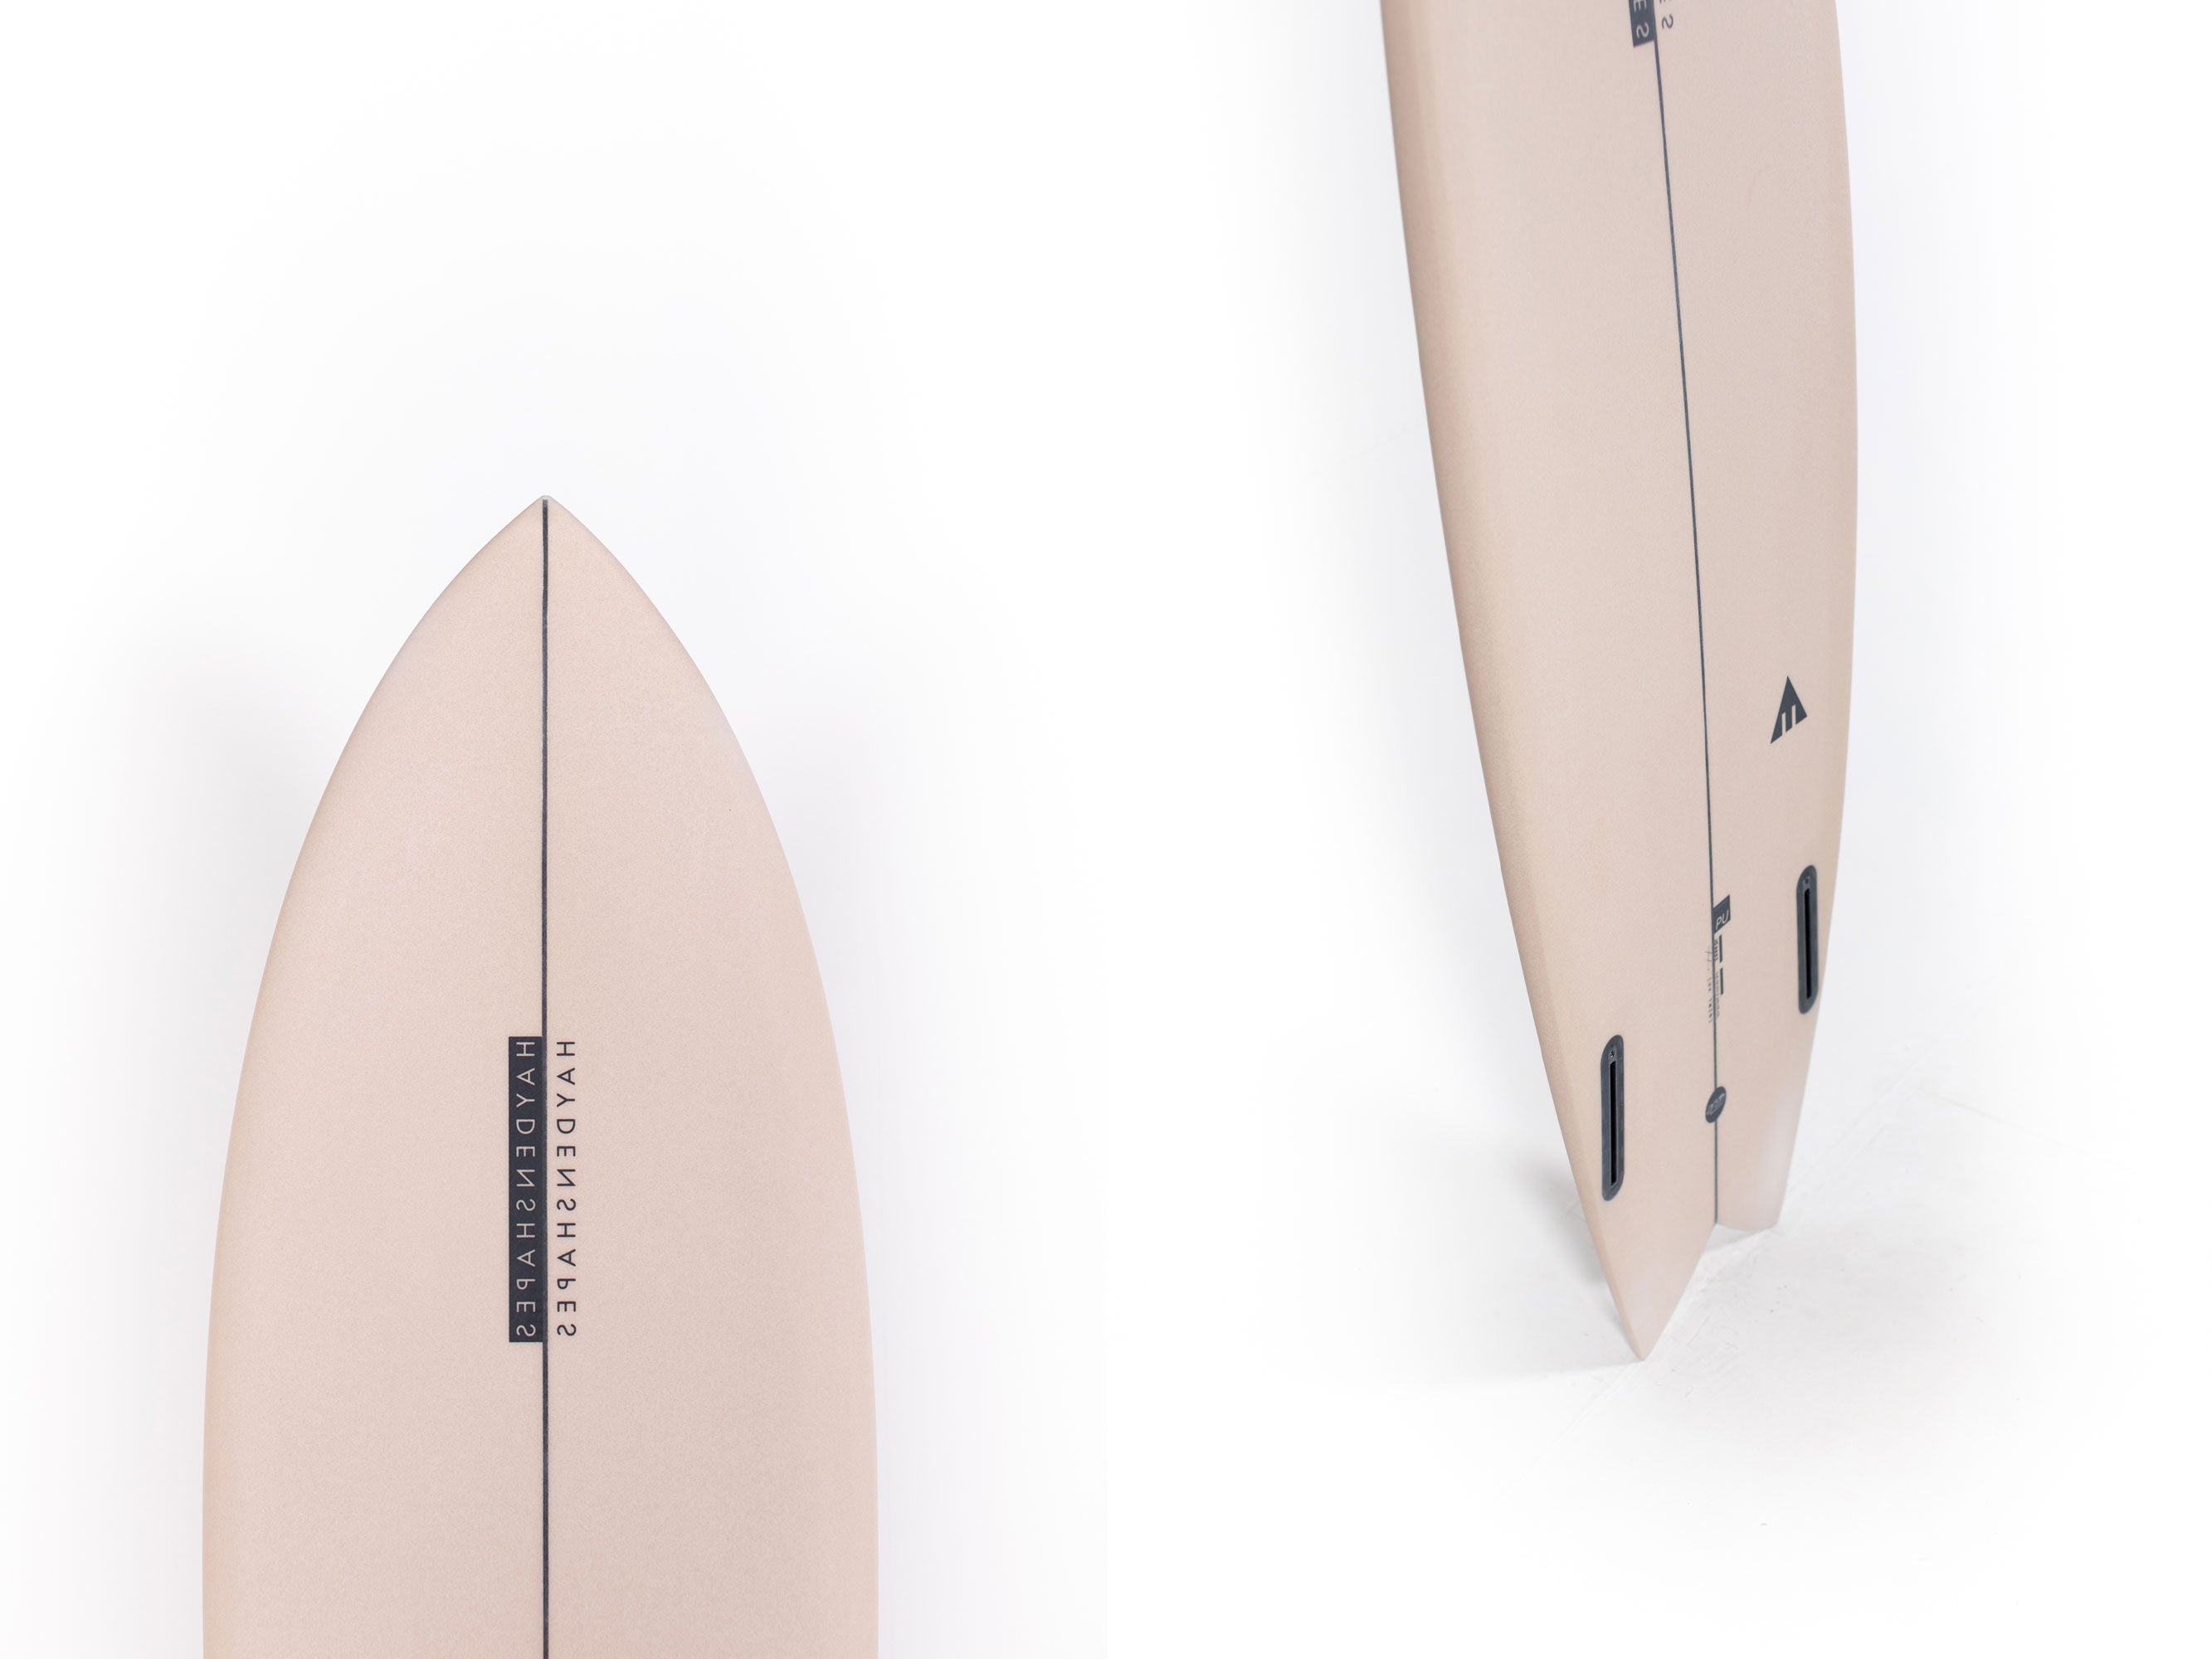 HaydenShapes Surfboard - HYPTO KRYPTO TWIN PU - 5'6" X 19 3/4" X 2 3/8" - 28.43L